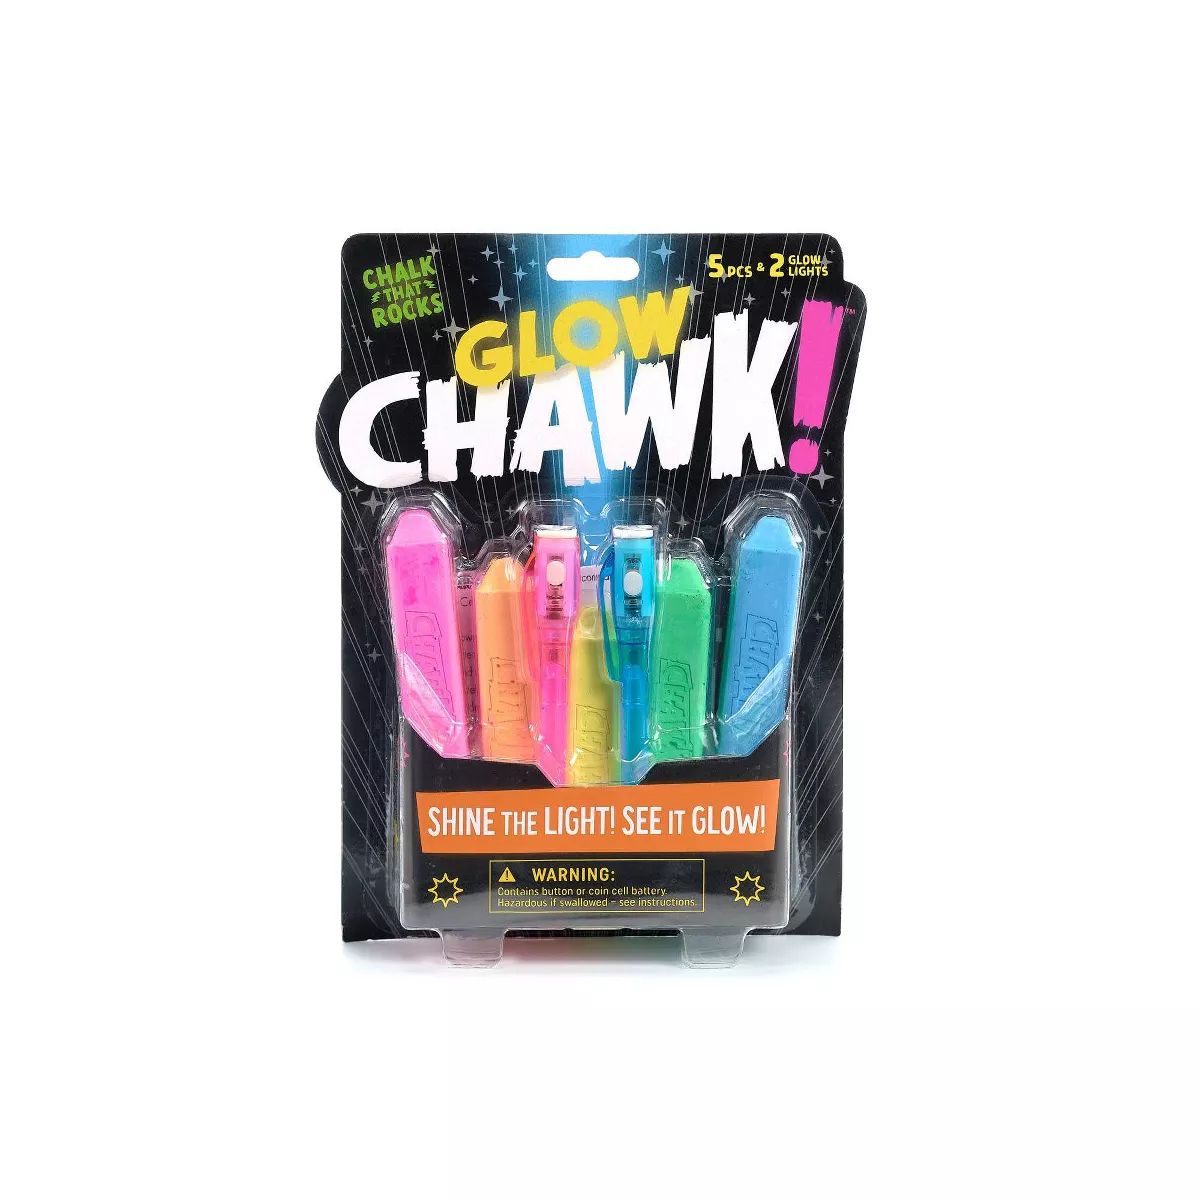 Chuckle & Roar Glow Chawk! Sidewalk Chalk – 5ct | Target